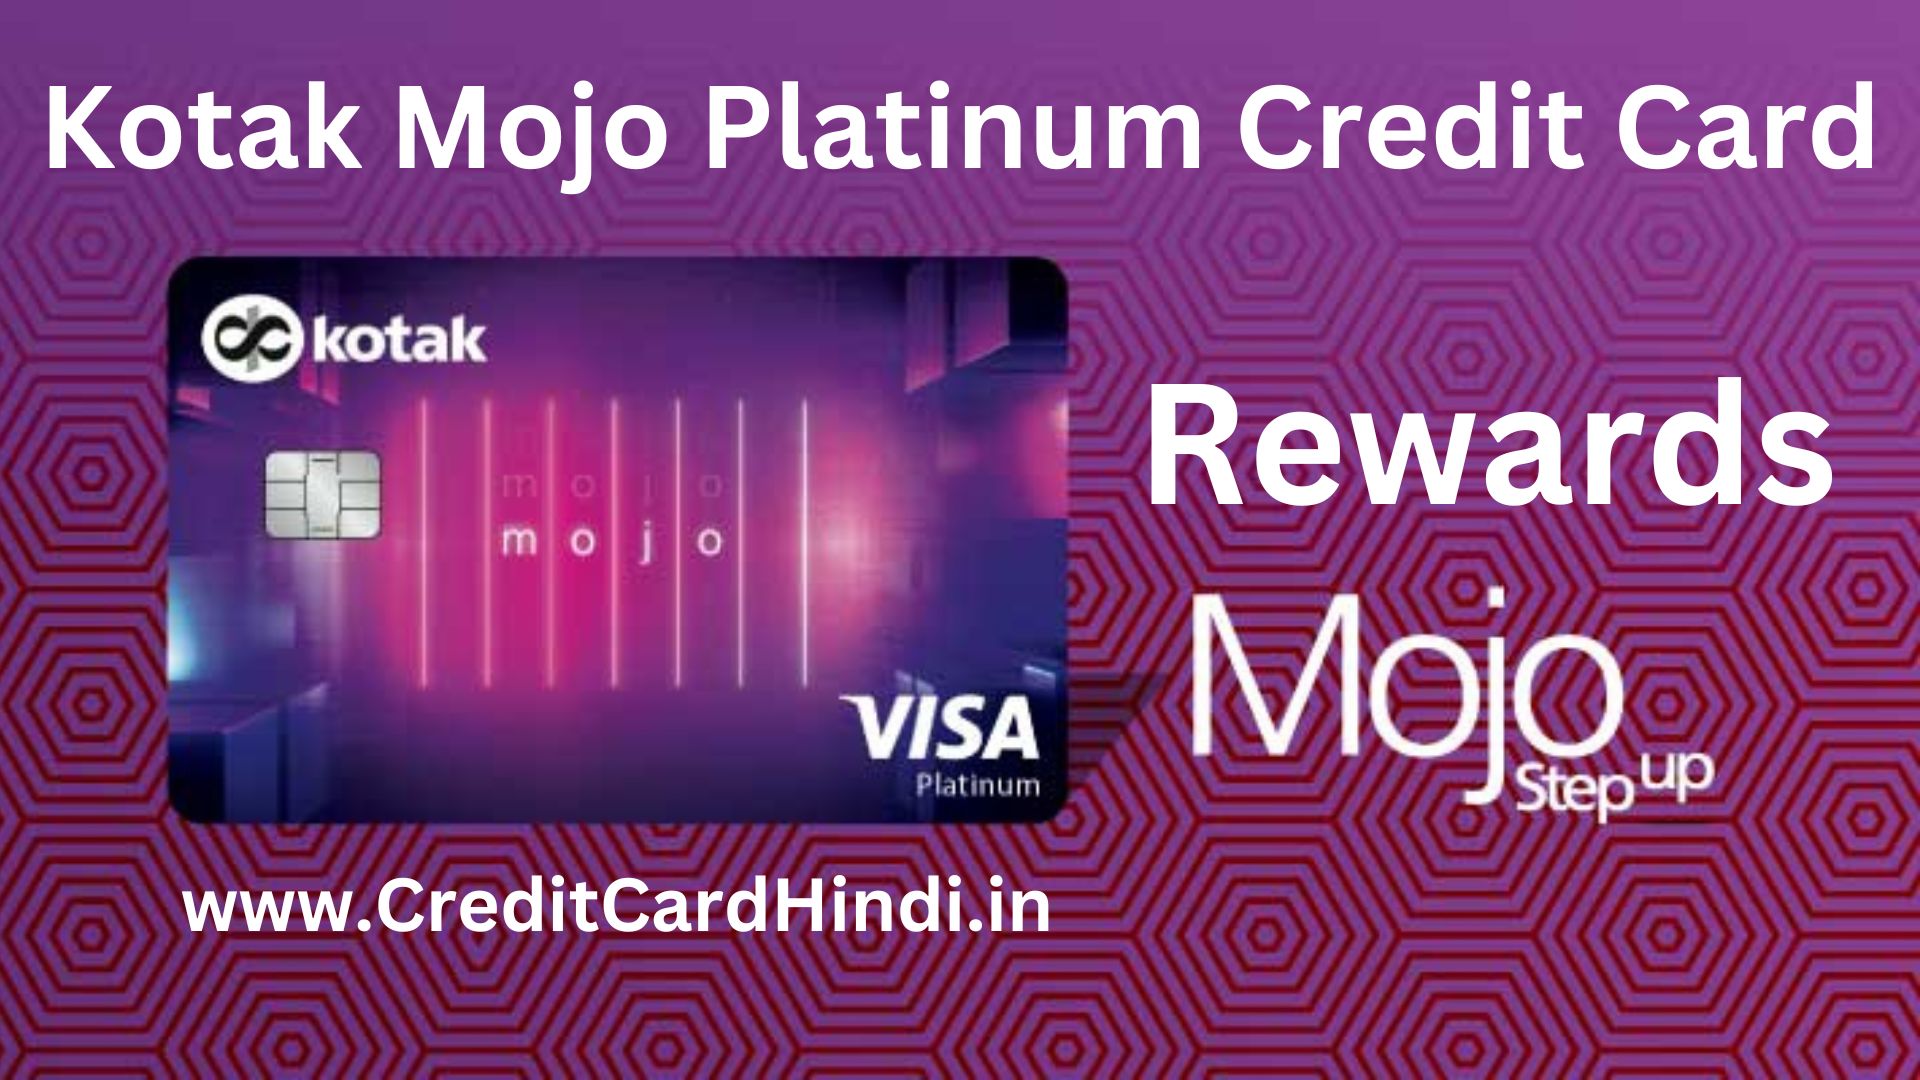 Kotak Mojo Platinum Credit Card Rewards & Benefits